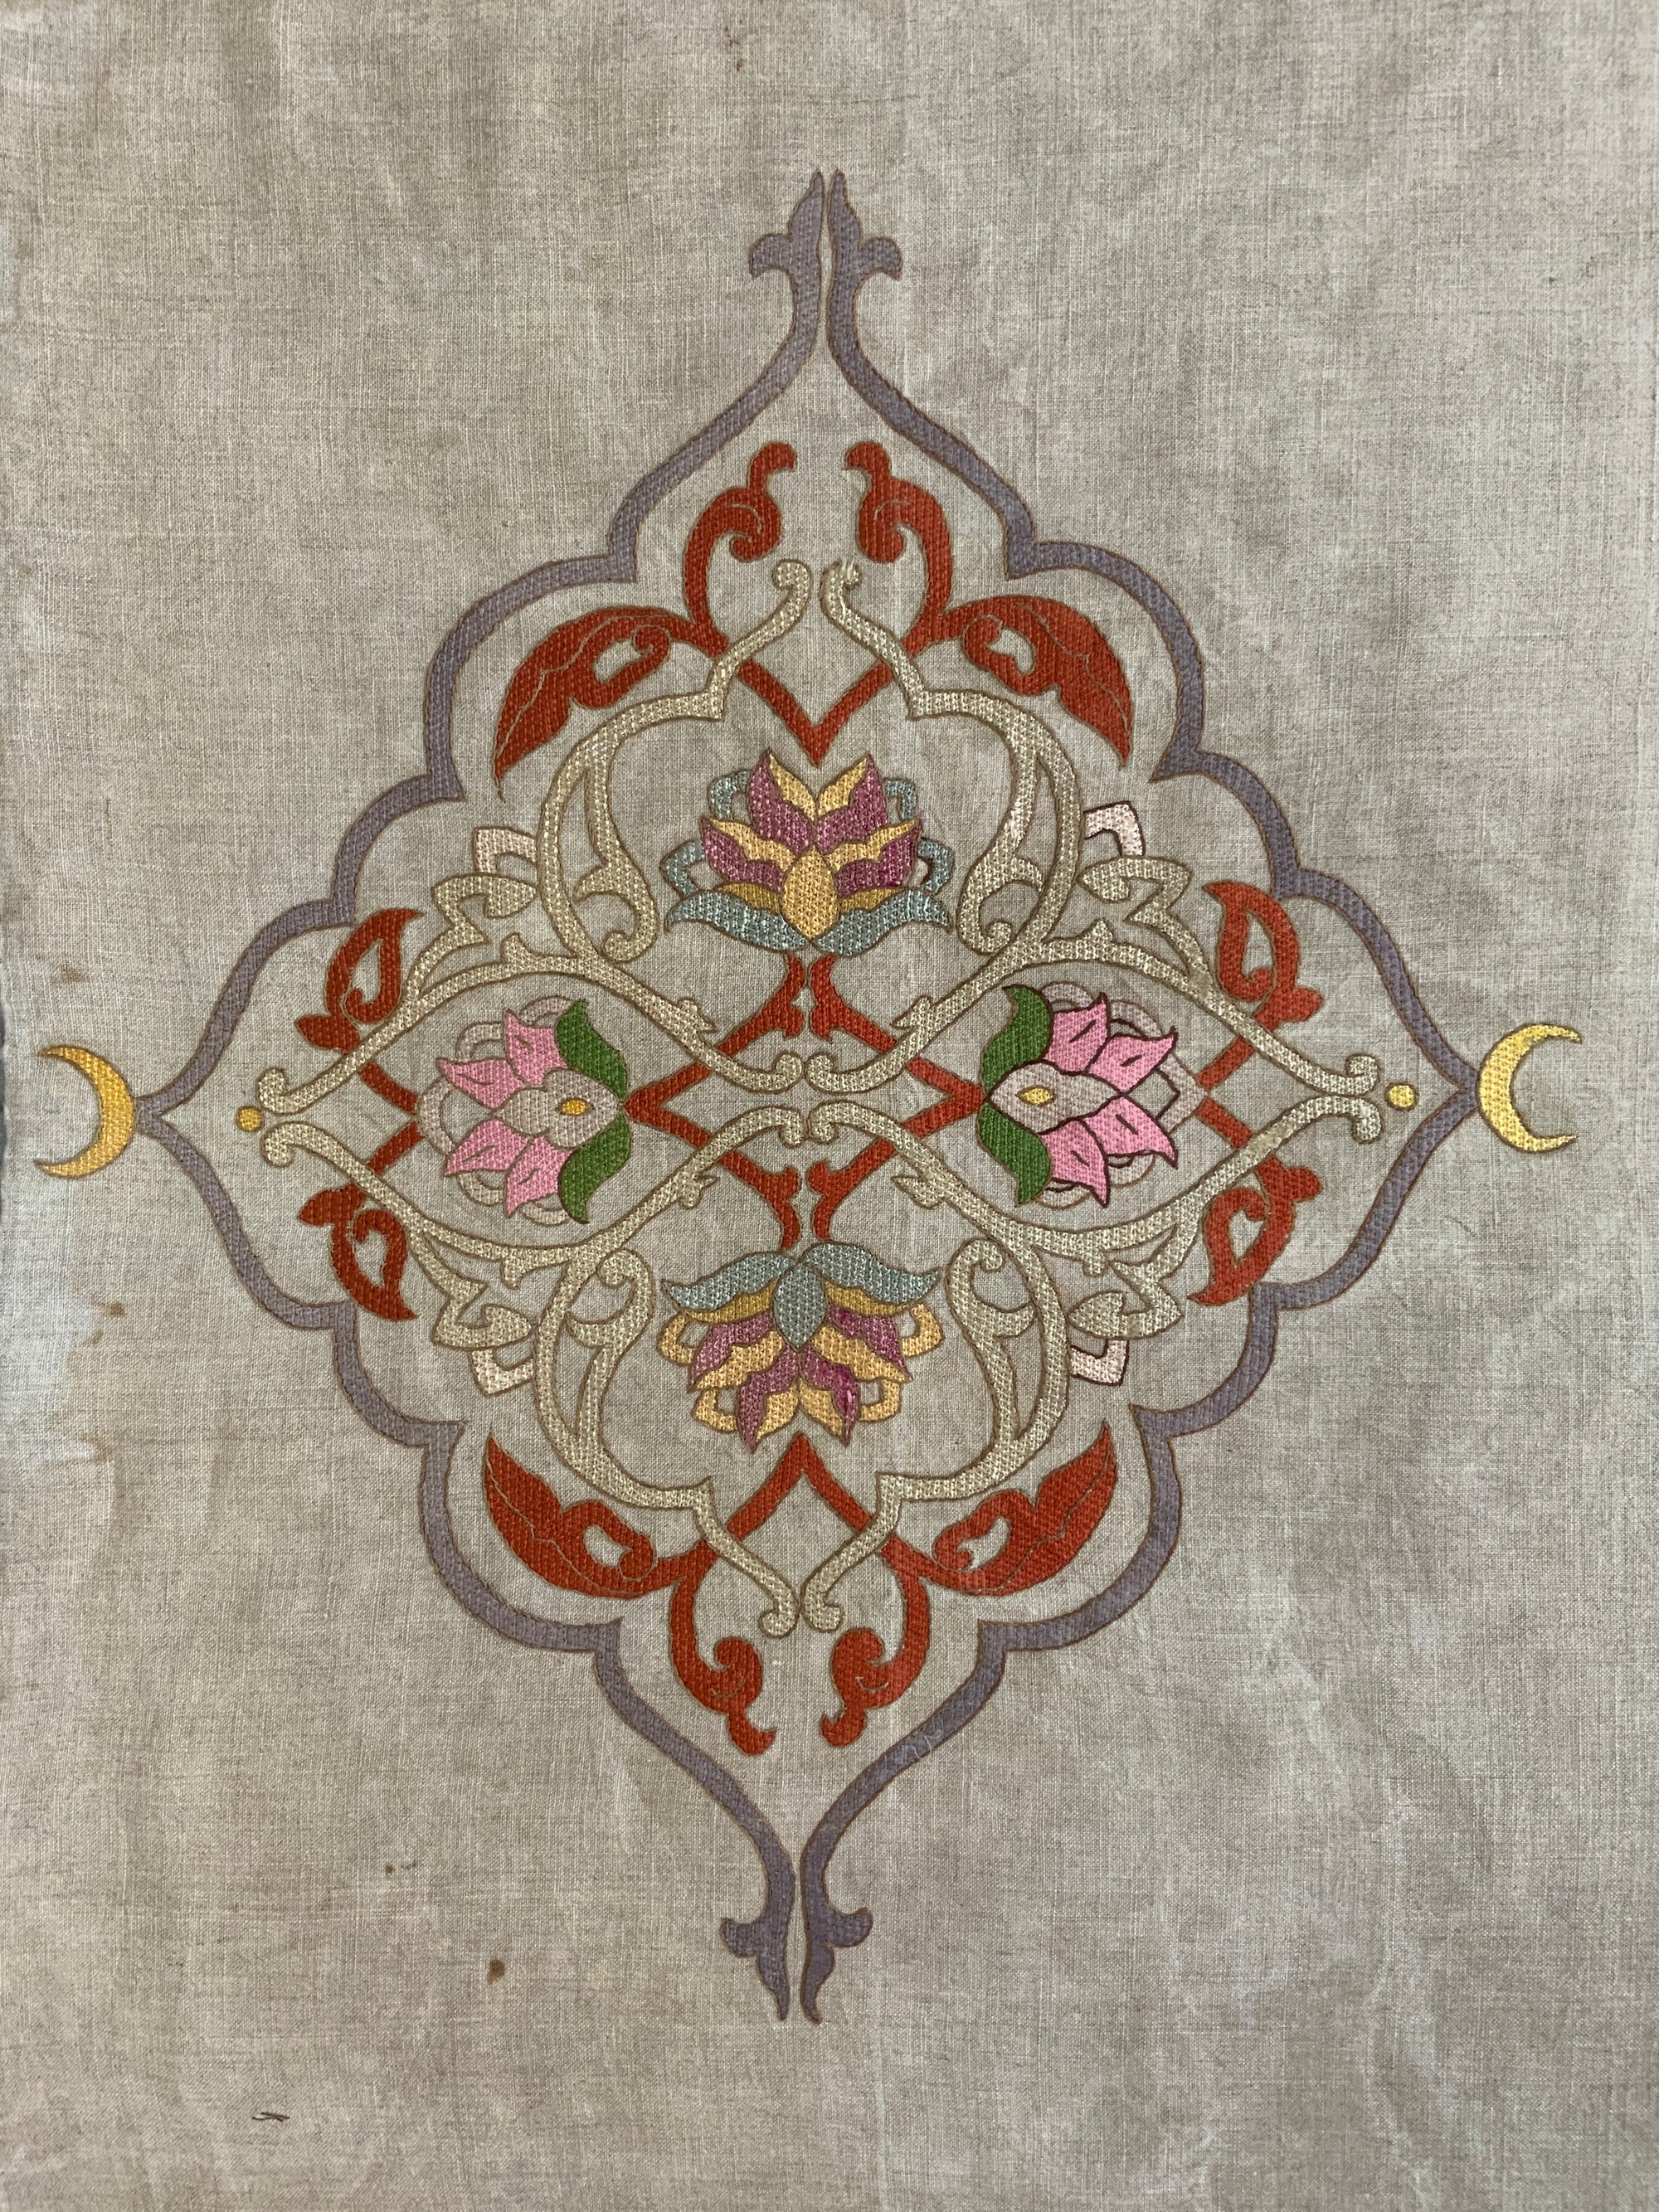 Arts & Crafts (?) imitation of Islamic embroidery (100 x 82cm)